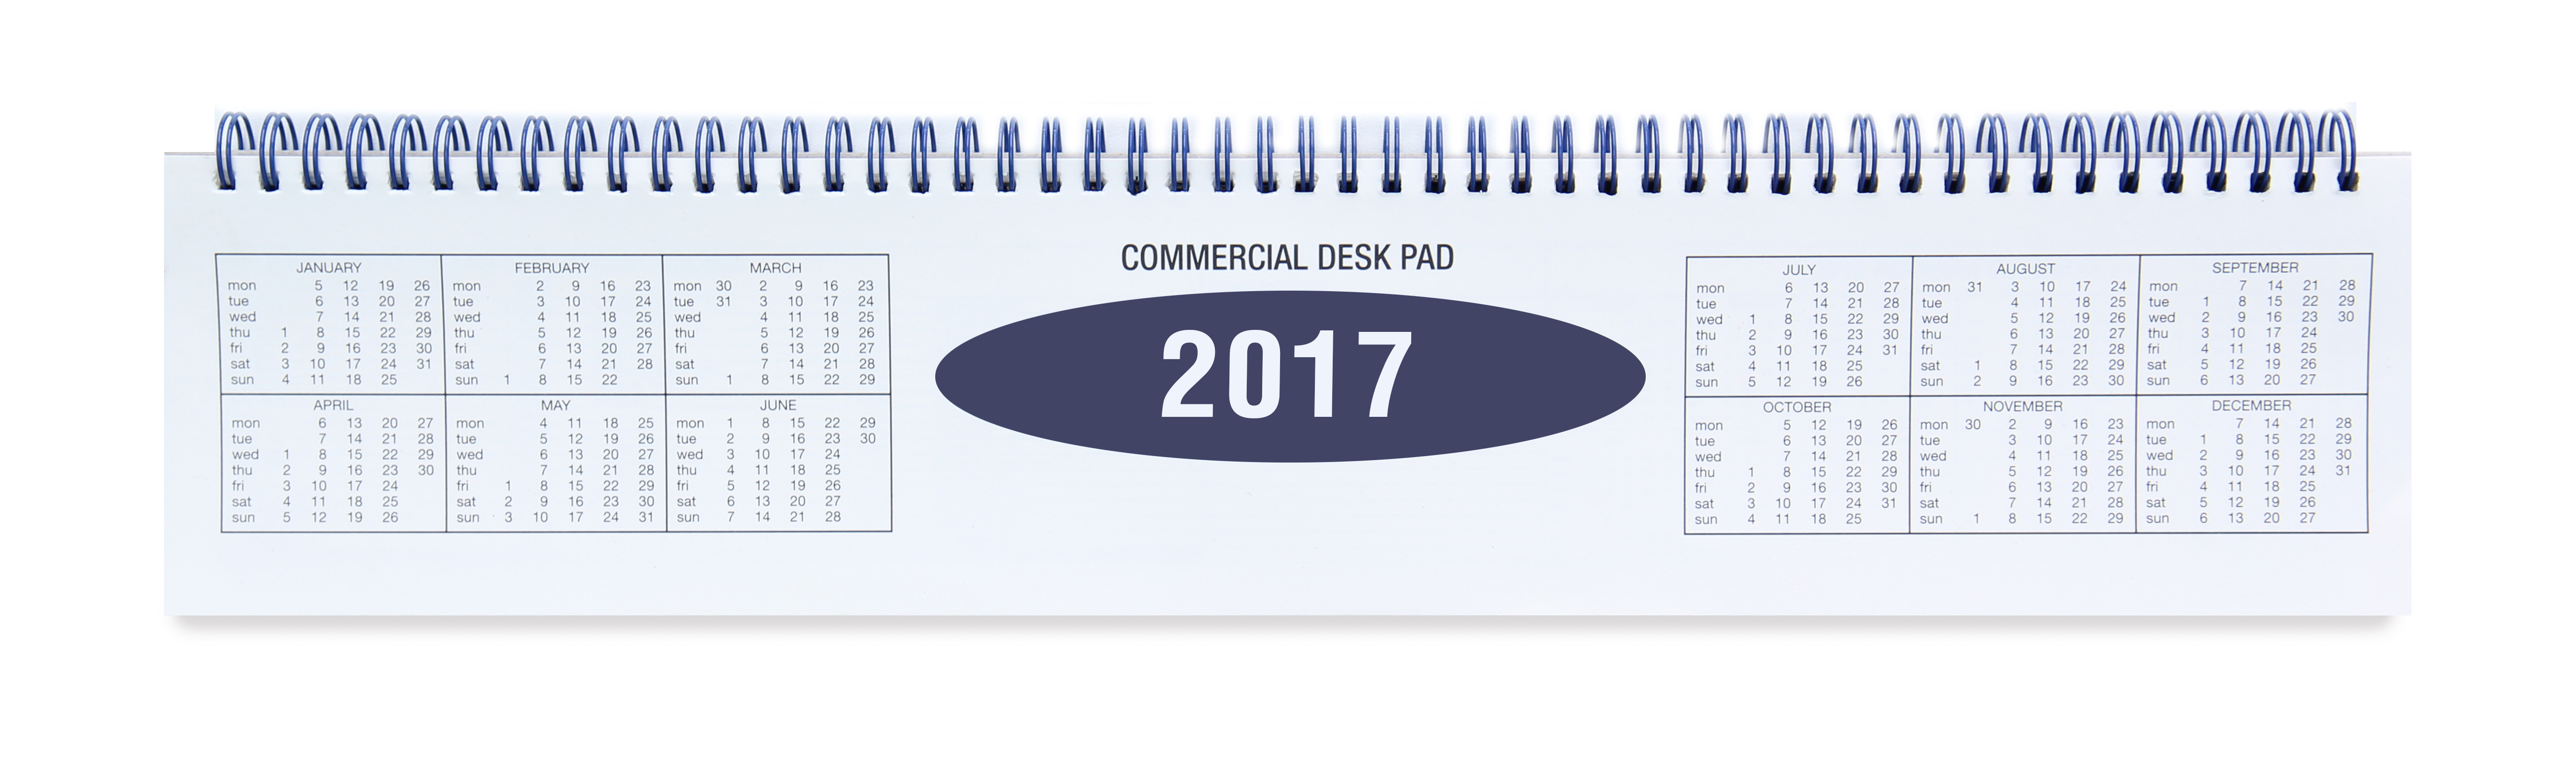 Commercial Desk Pad Refill